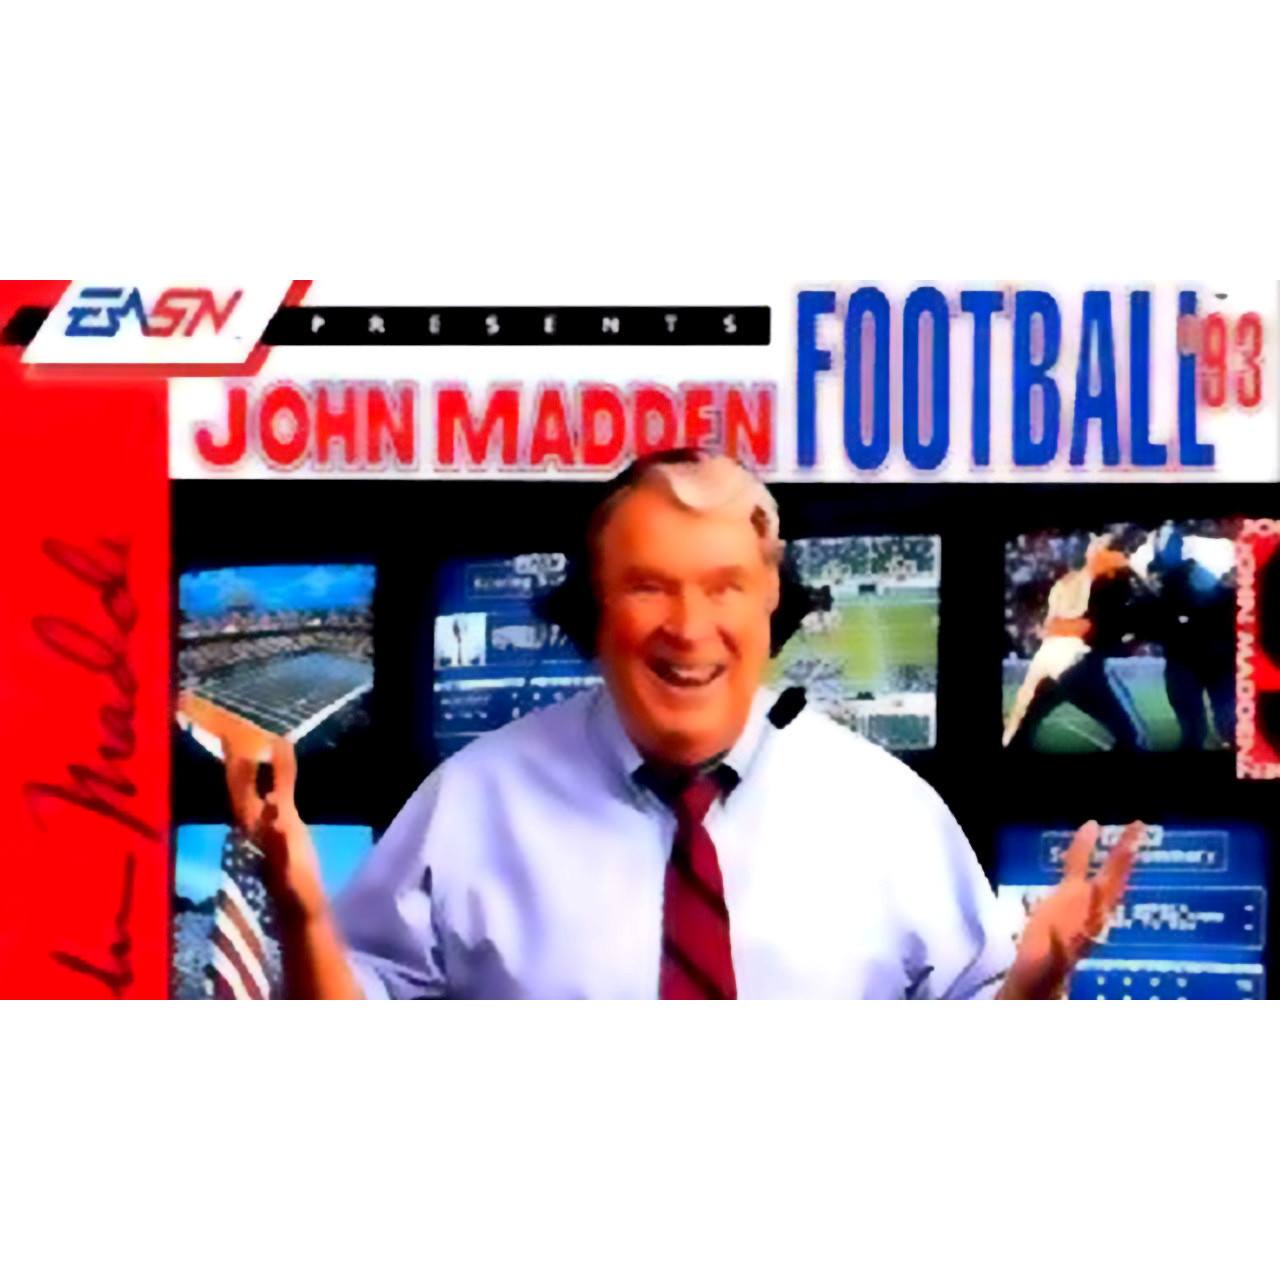 John Madden Football '93 SNES Super Nintendo Game